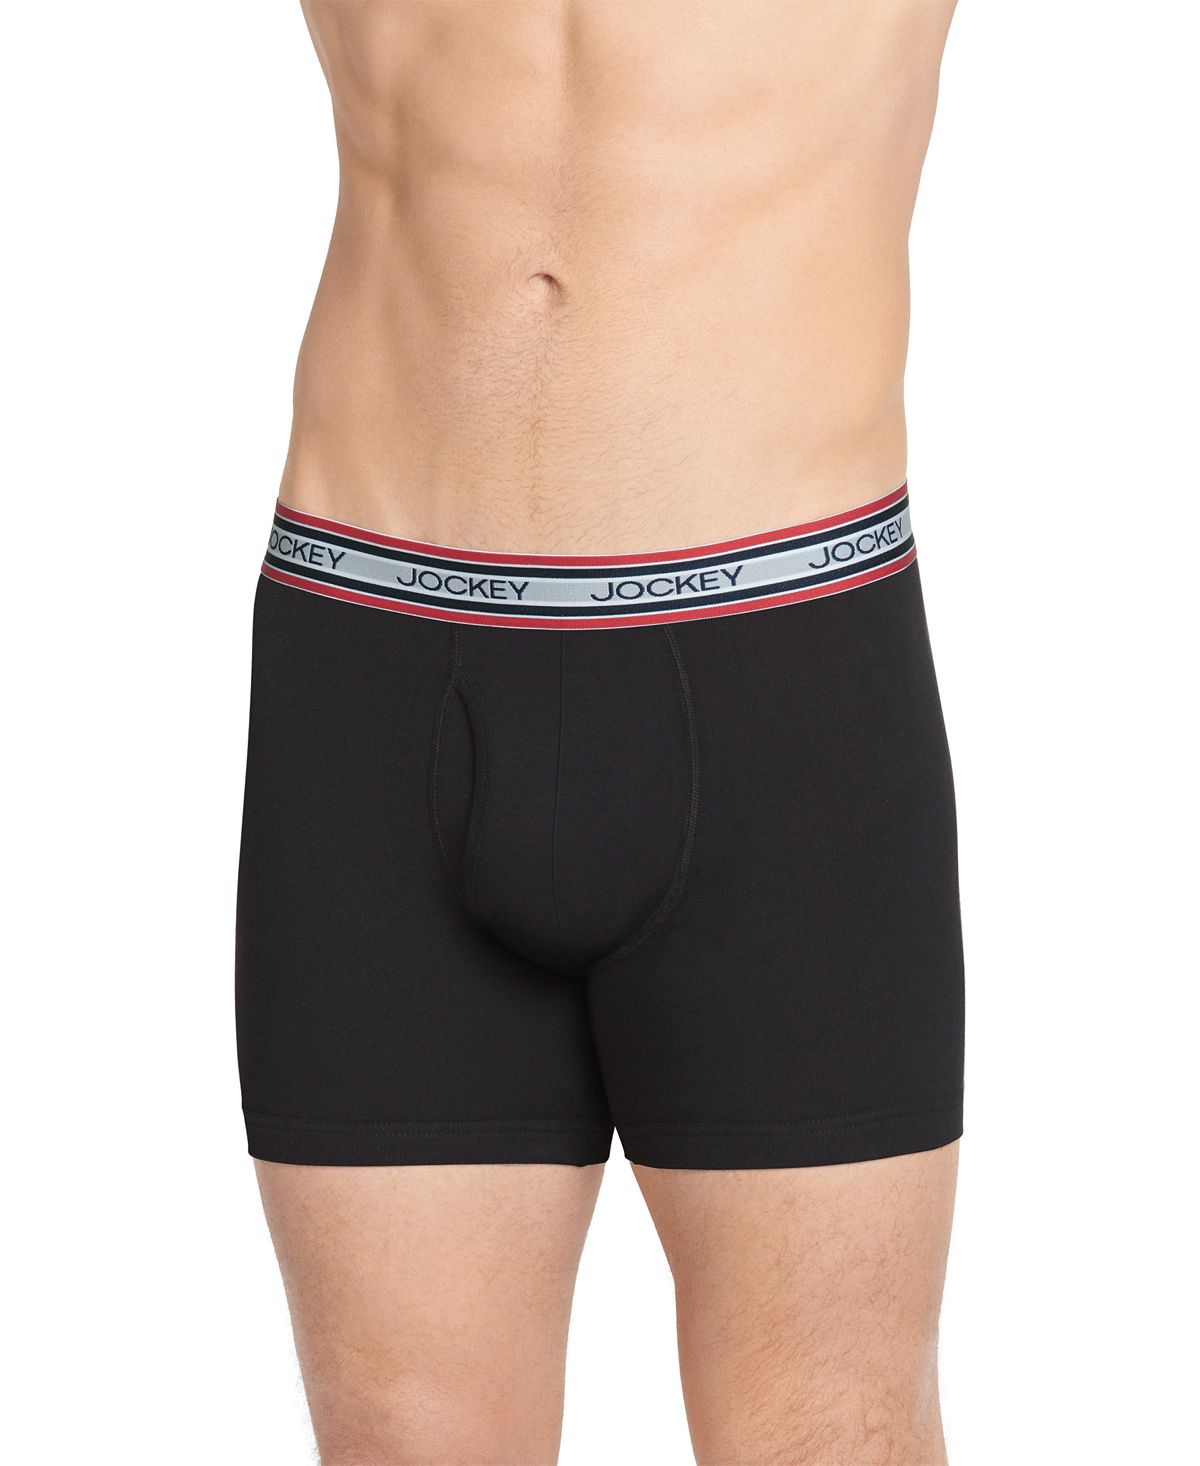 Soft jockey seamless mens underwear For Comfort 